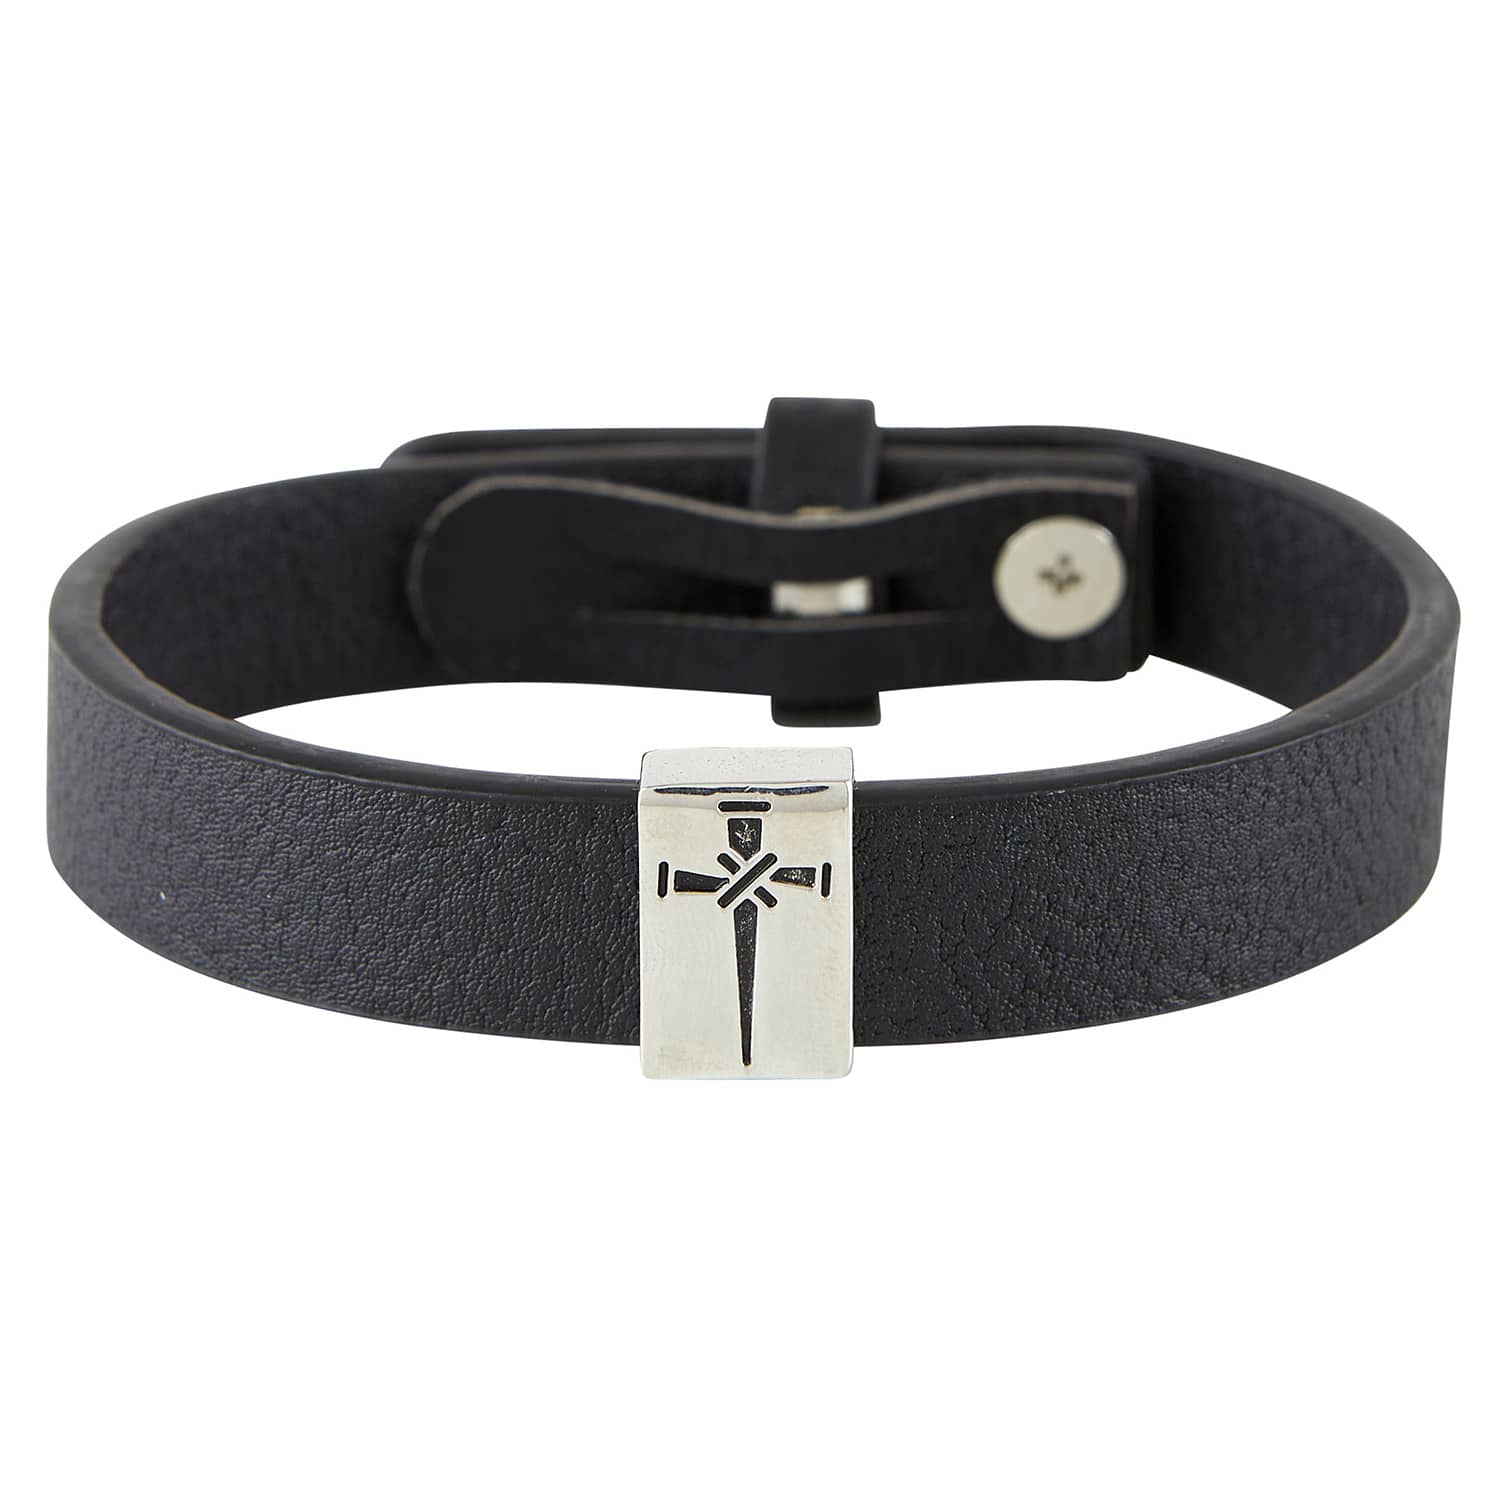 Christian Wristbands & Bracelets - The Christian Shop